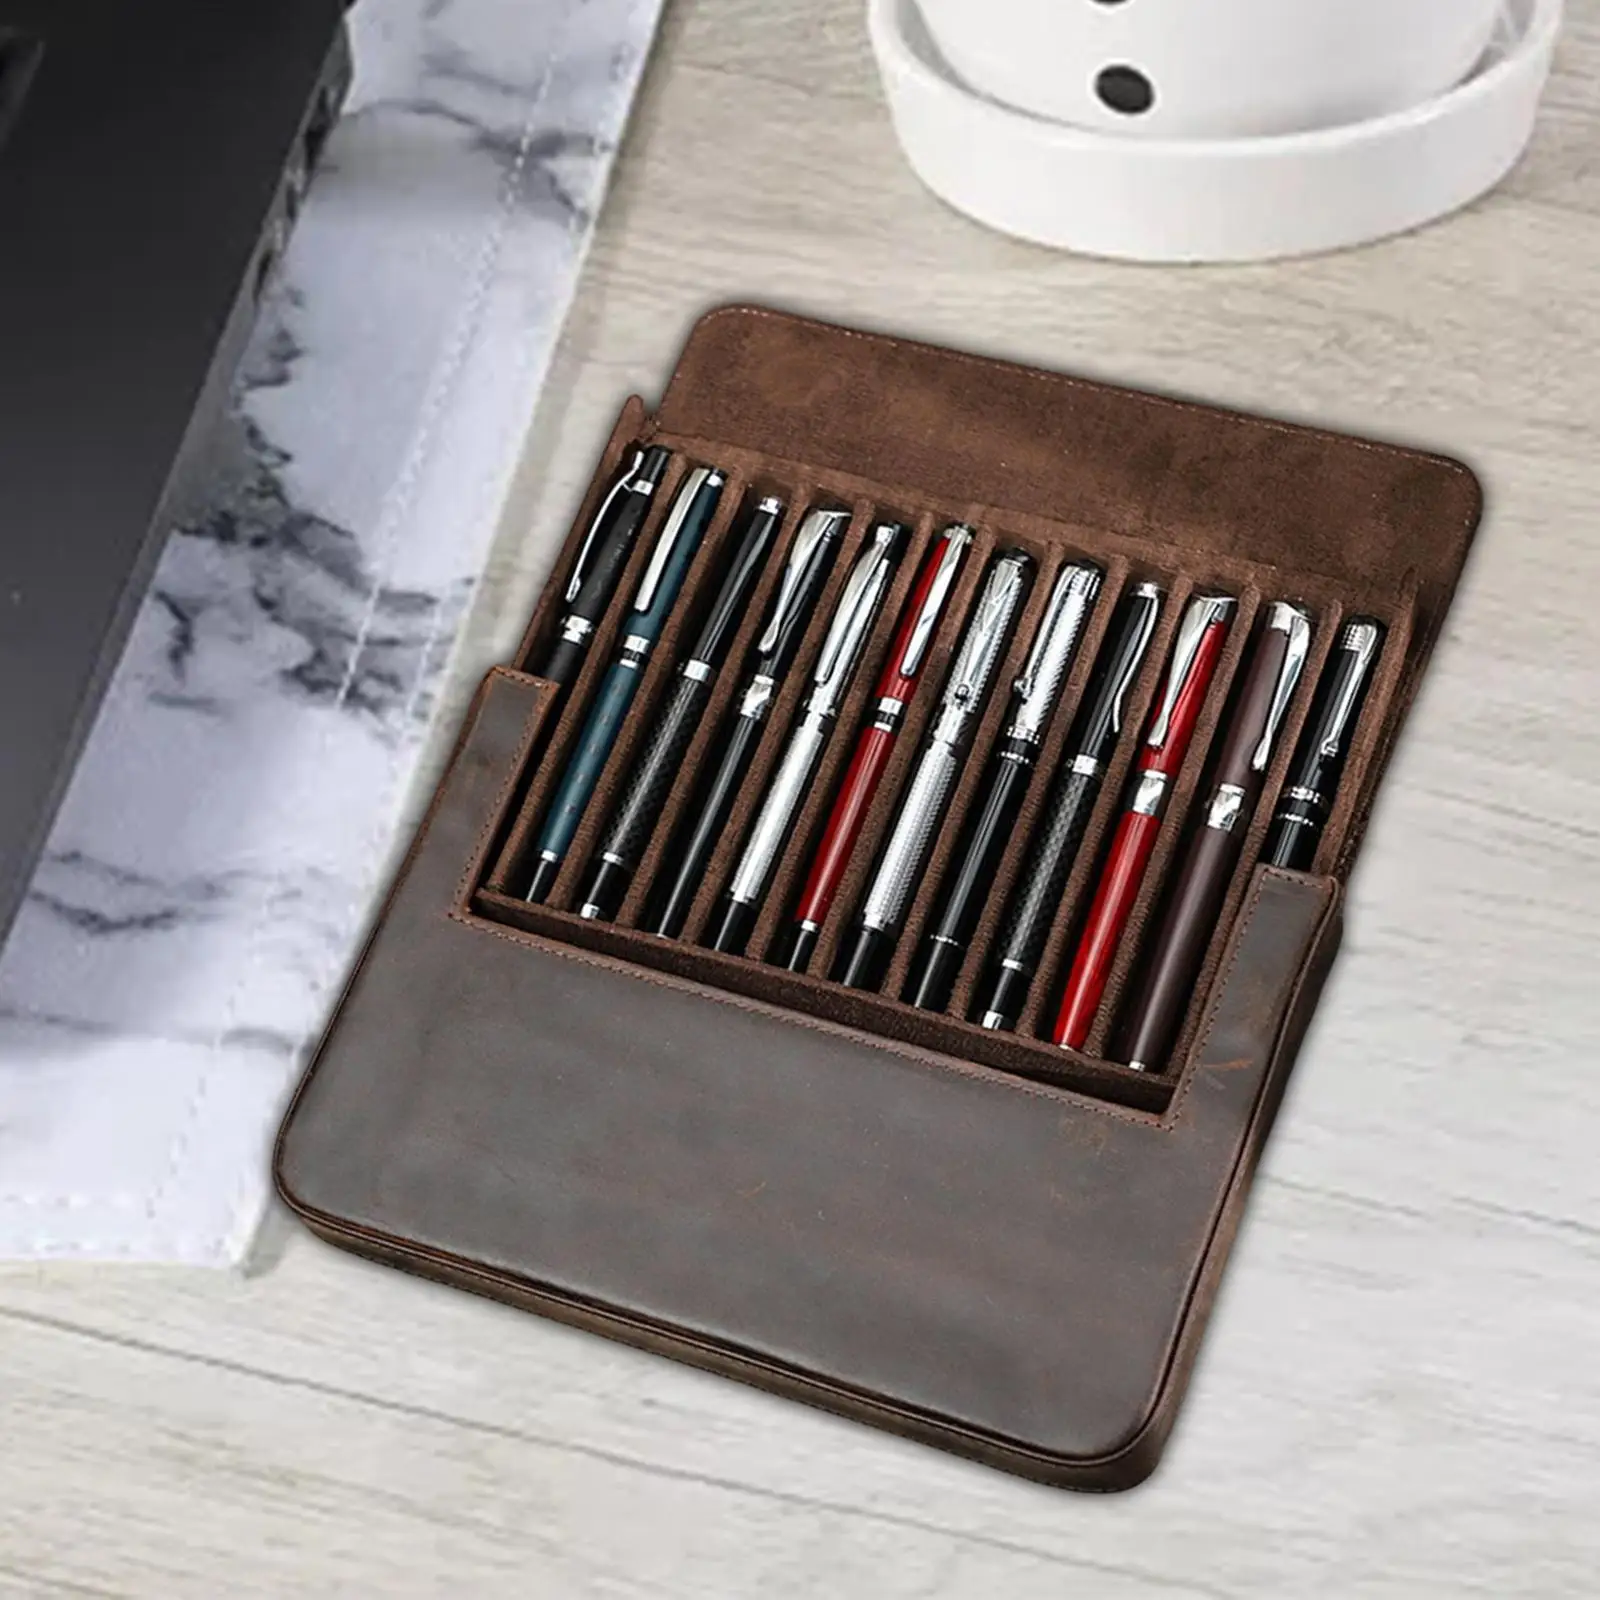 Handmade Pen Cases 12 Slot Cases Sleeves Pens Pouch Pen Holder Office Supplies Fashion Design Stationery Bag for Men Women Adult